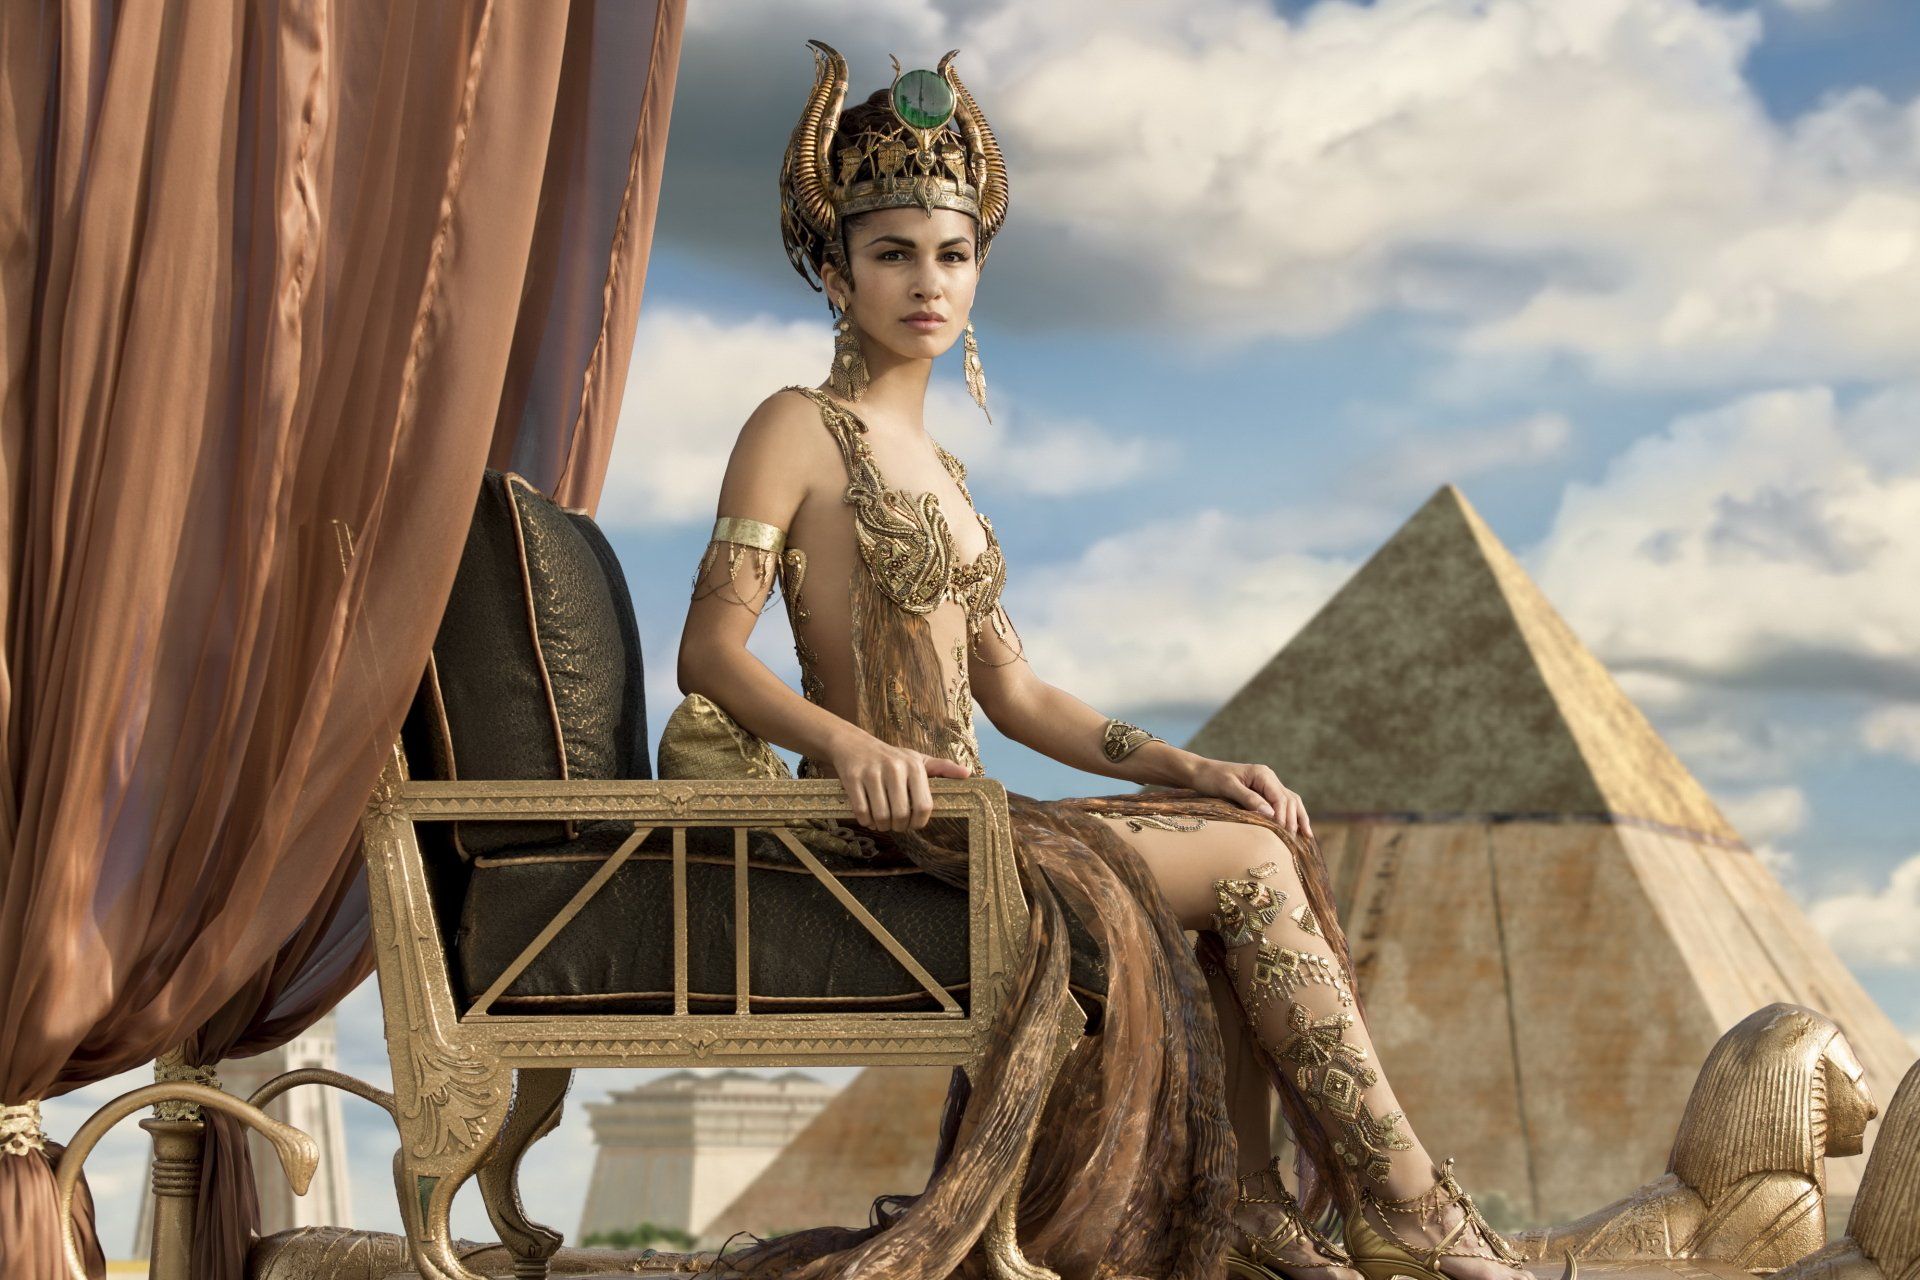 13700 Egyptian Goddess Stock Photos Pictures  RoyaltyFree Images   iStock  Isis egyptian goddess